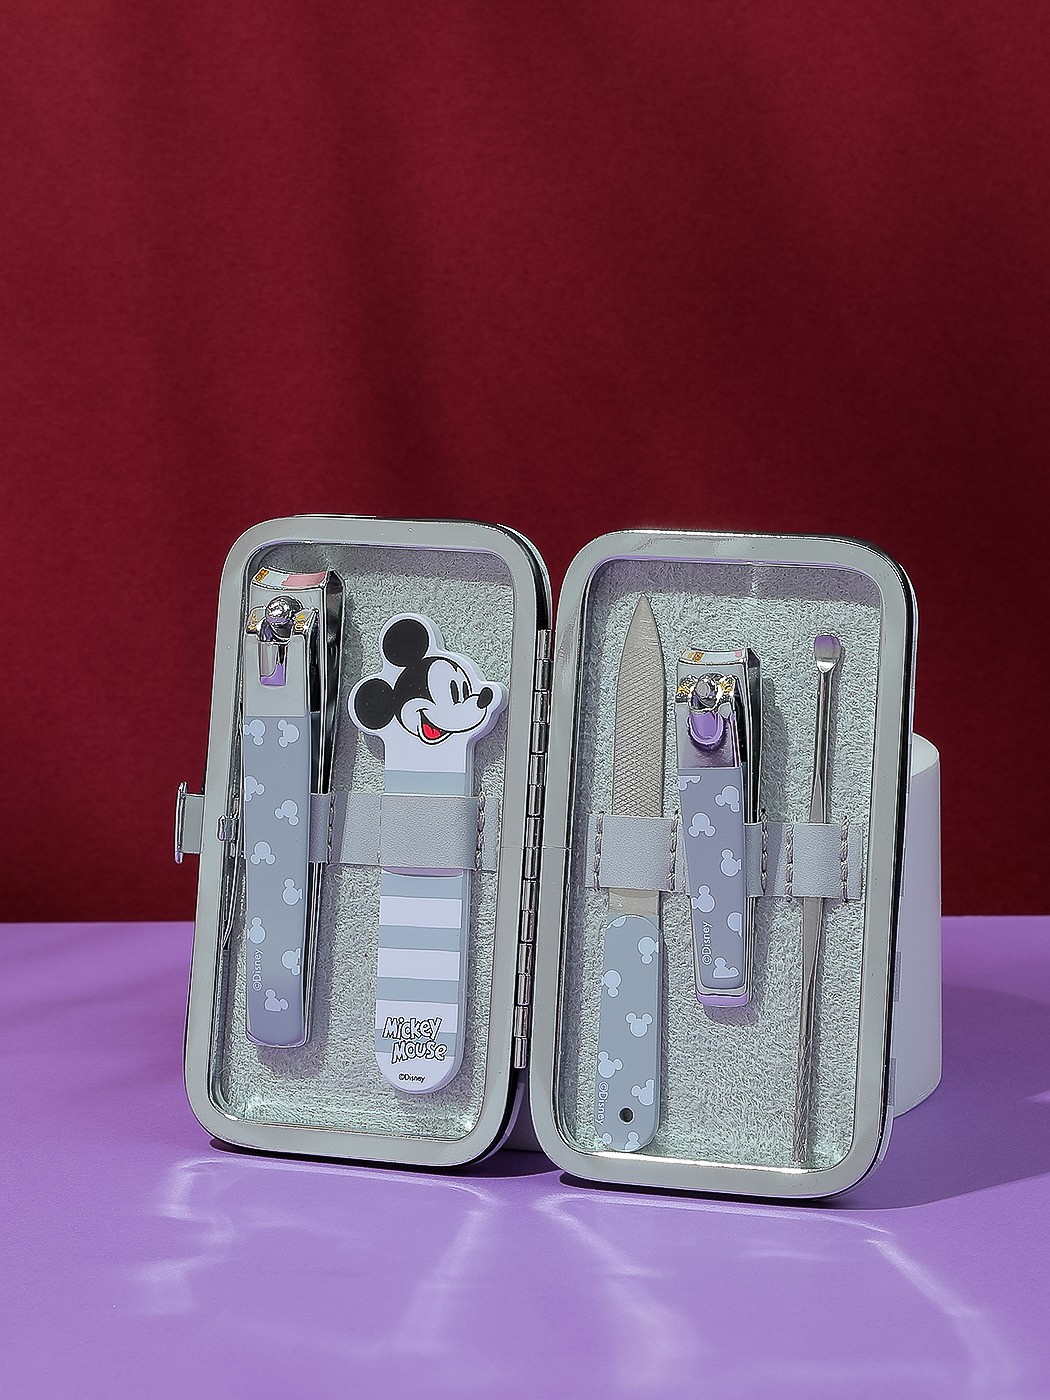 Mickey Mouse Lisanslı Çantalı 5 Parça Manikür Seti